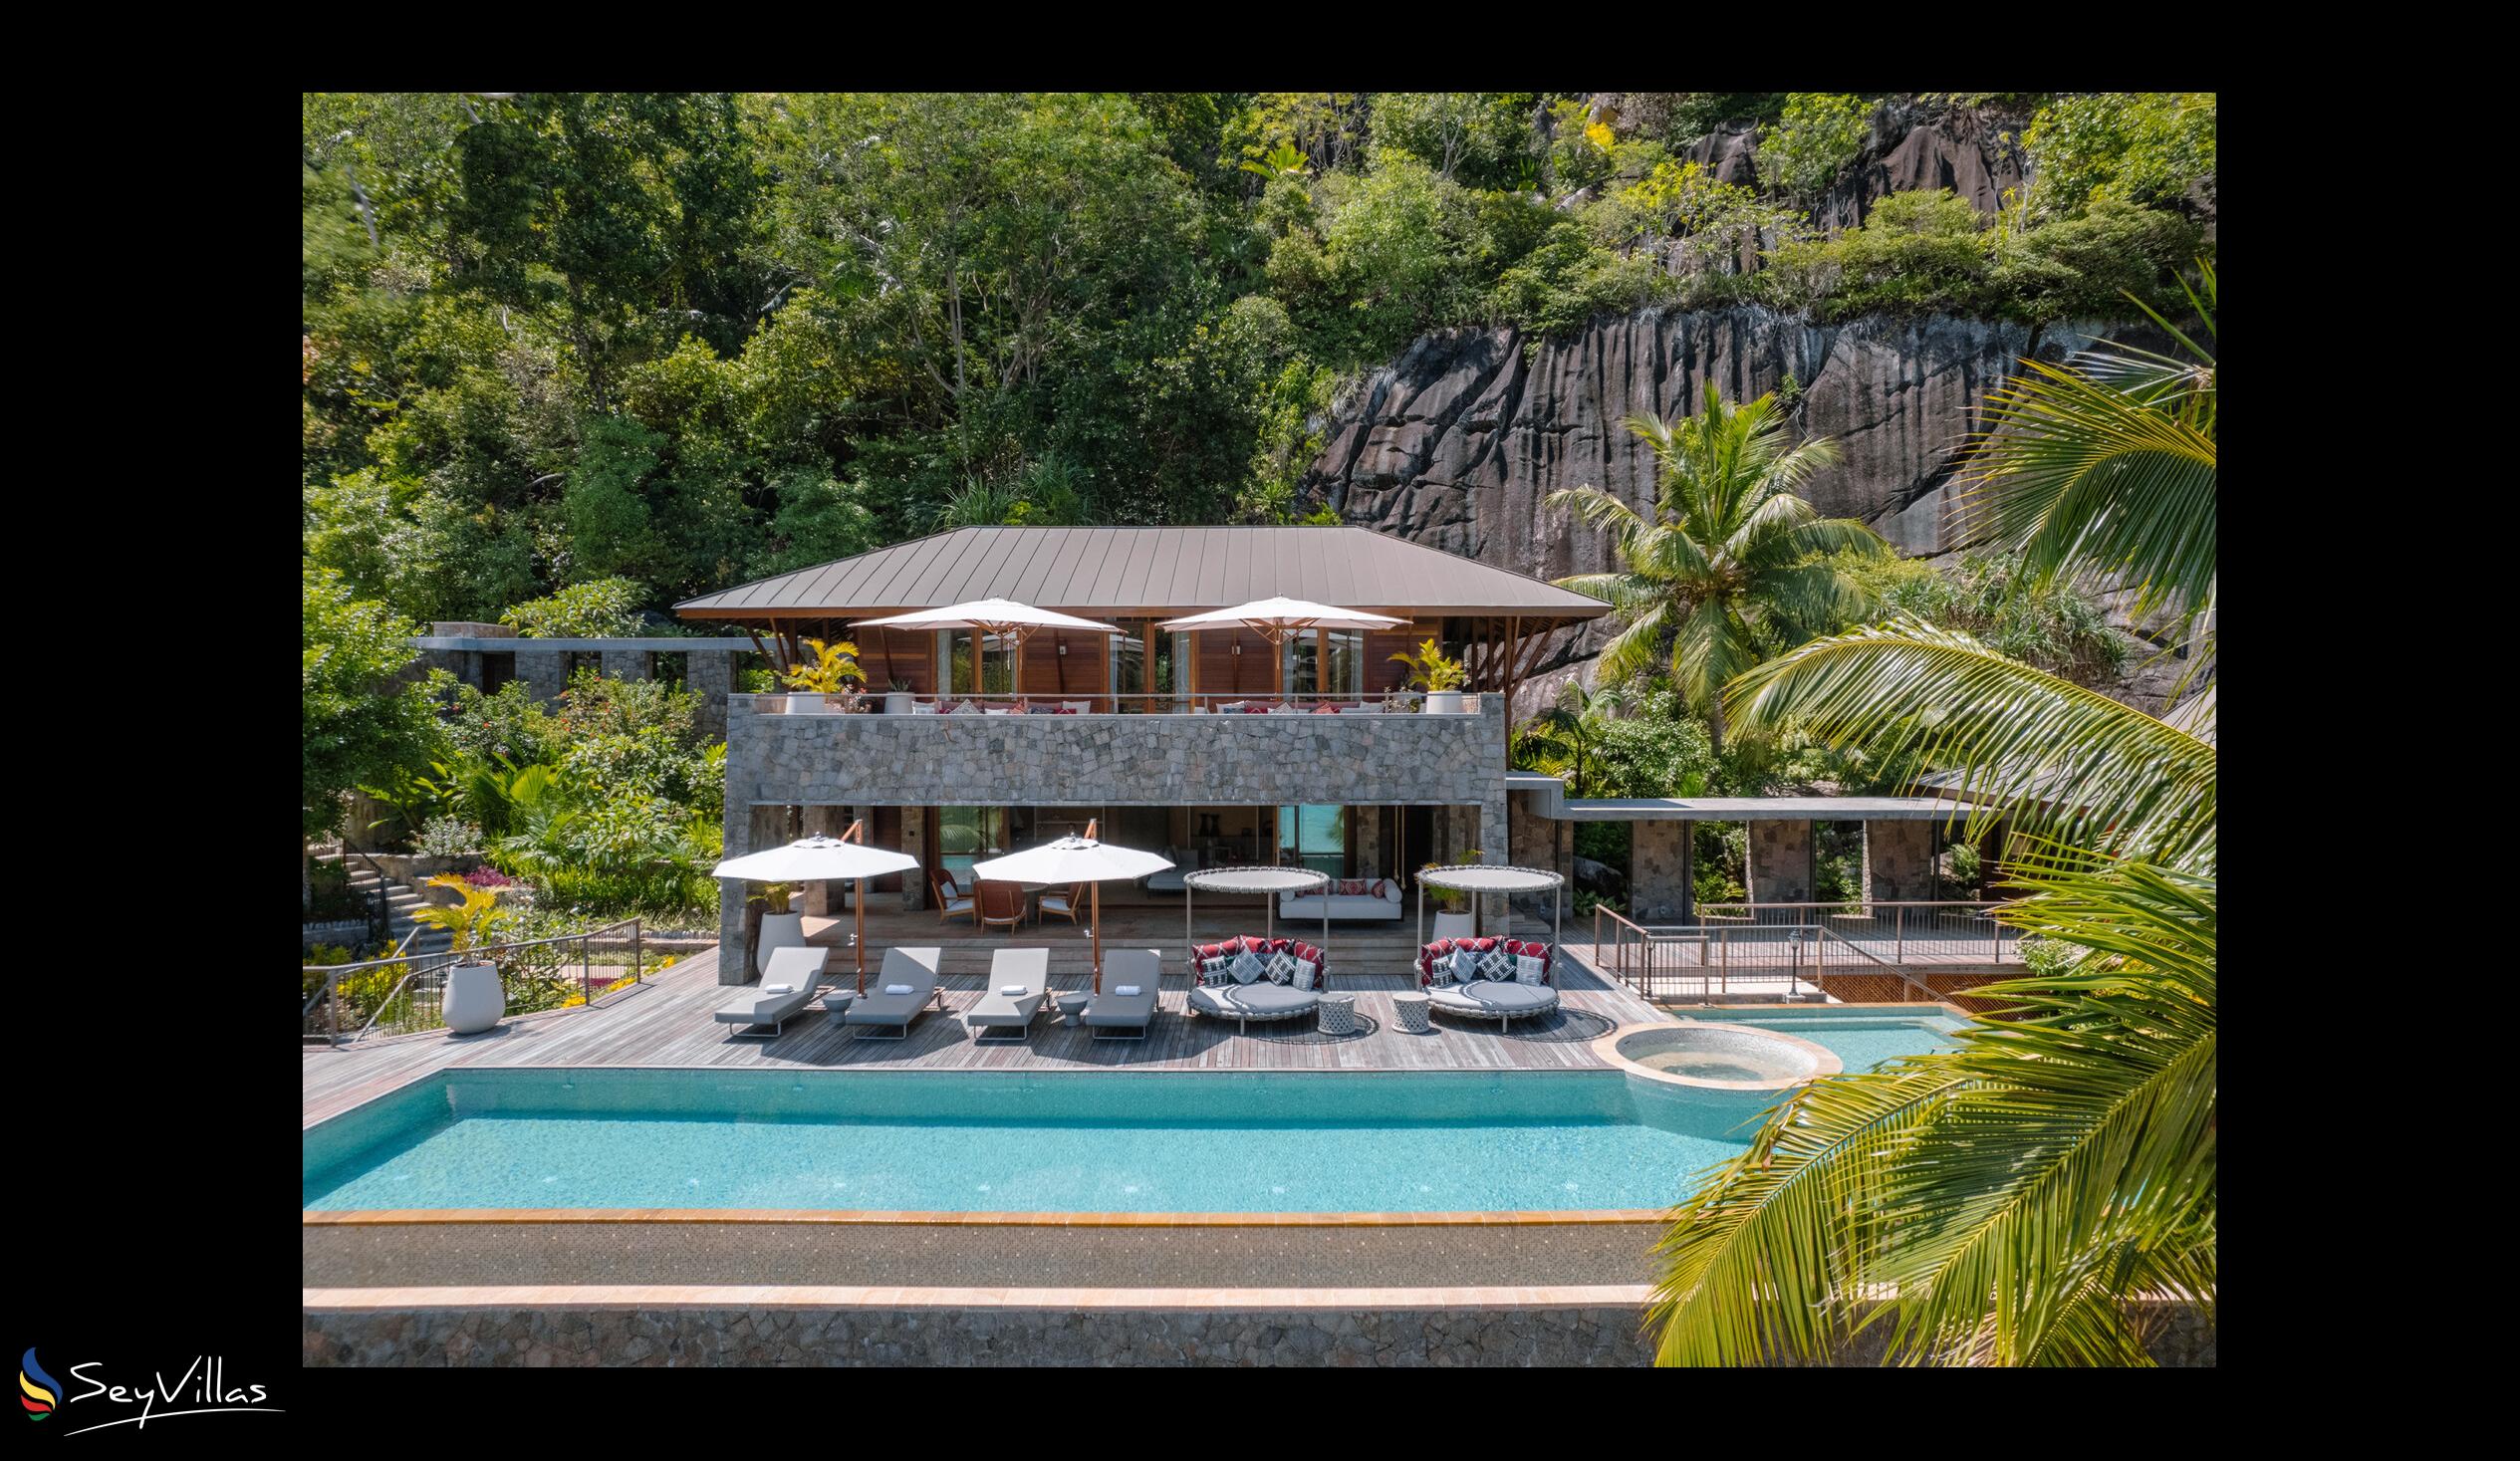 Photo 91: Four Seasons Resort - 3-Bedroom Royal Suite - Mahé (Seychelles)